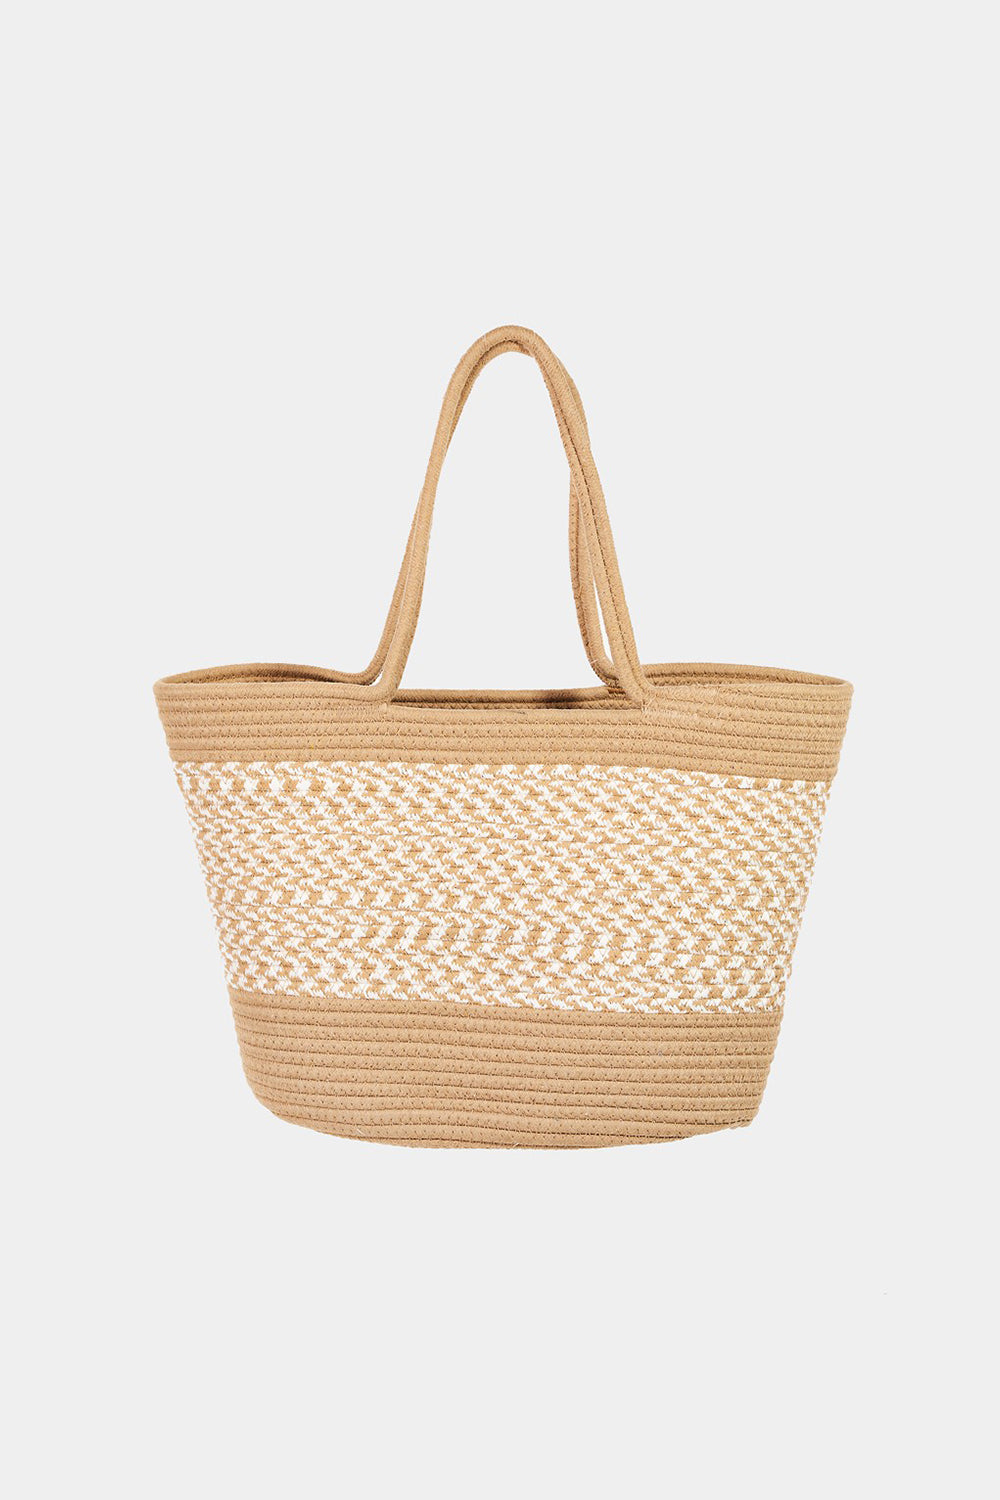 Braid Pattern Beach Tote Bag for Women | Bag | Ro + Ivy